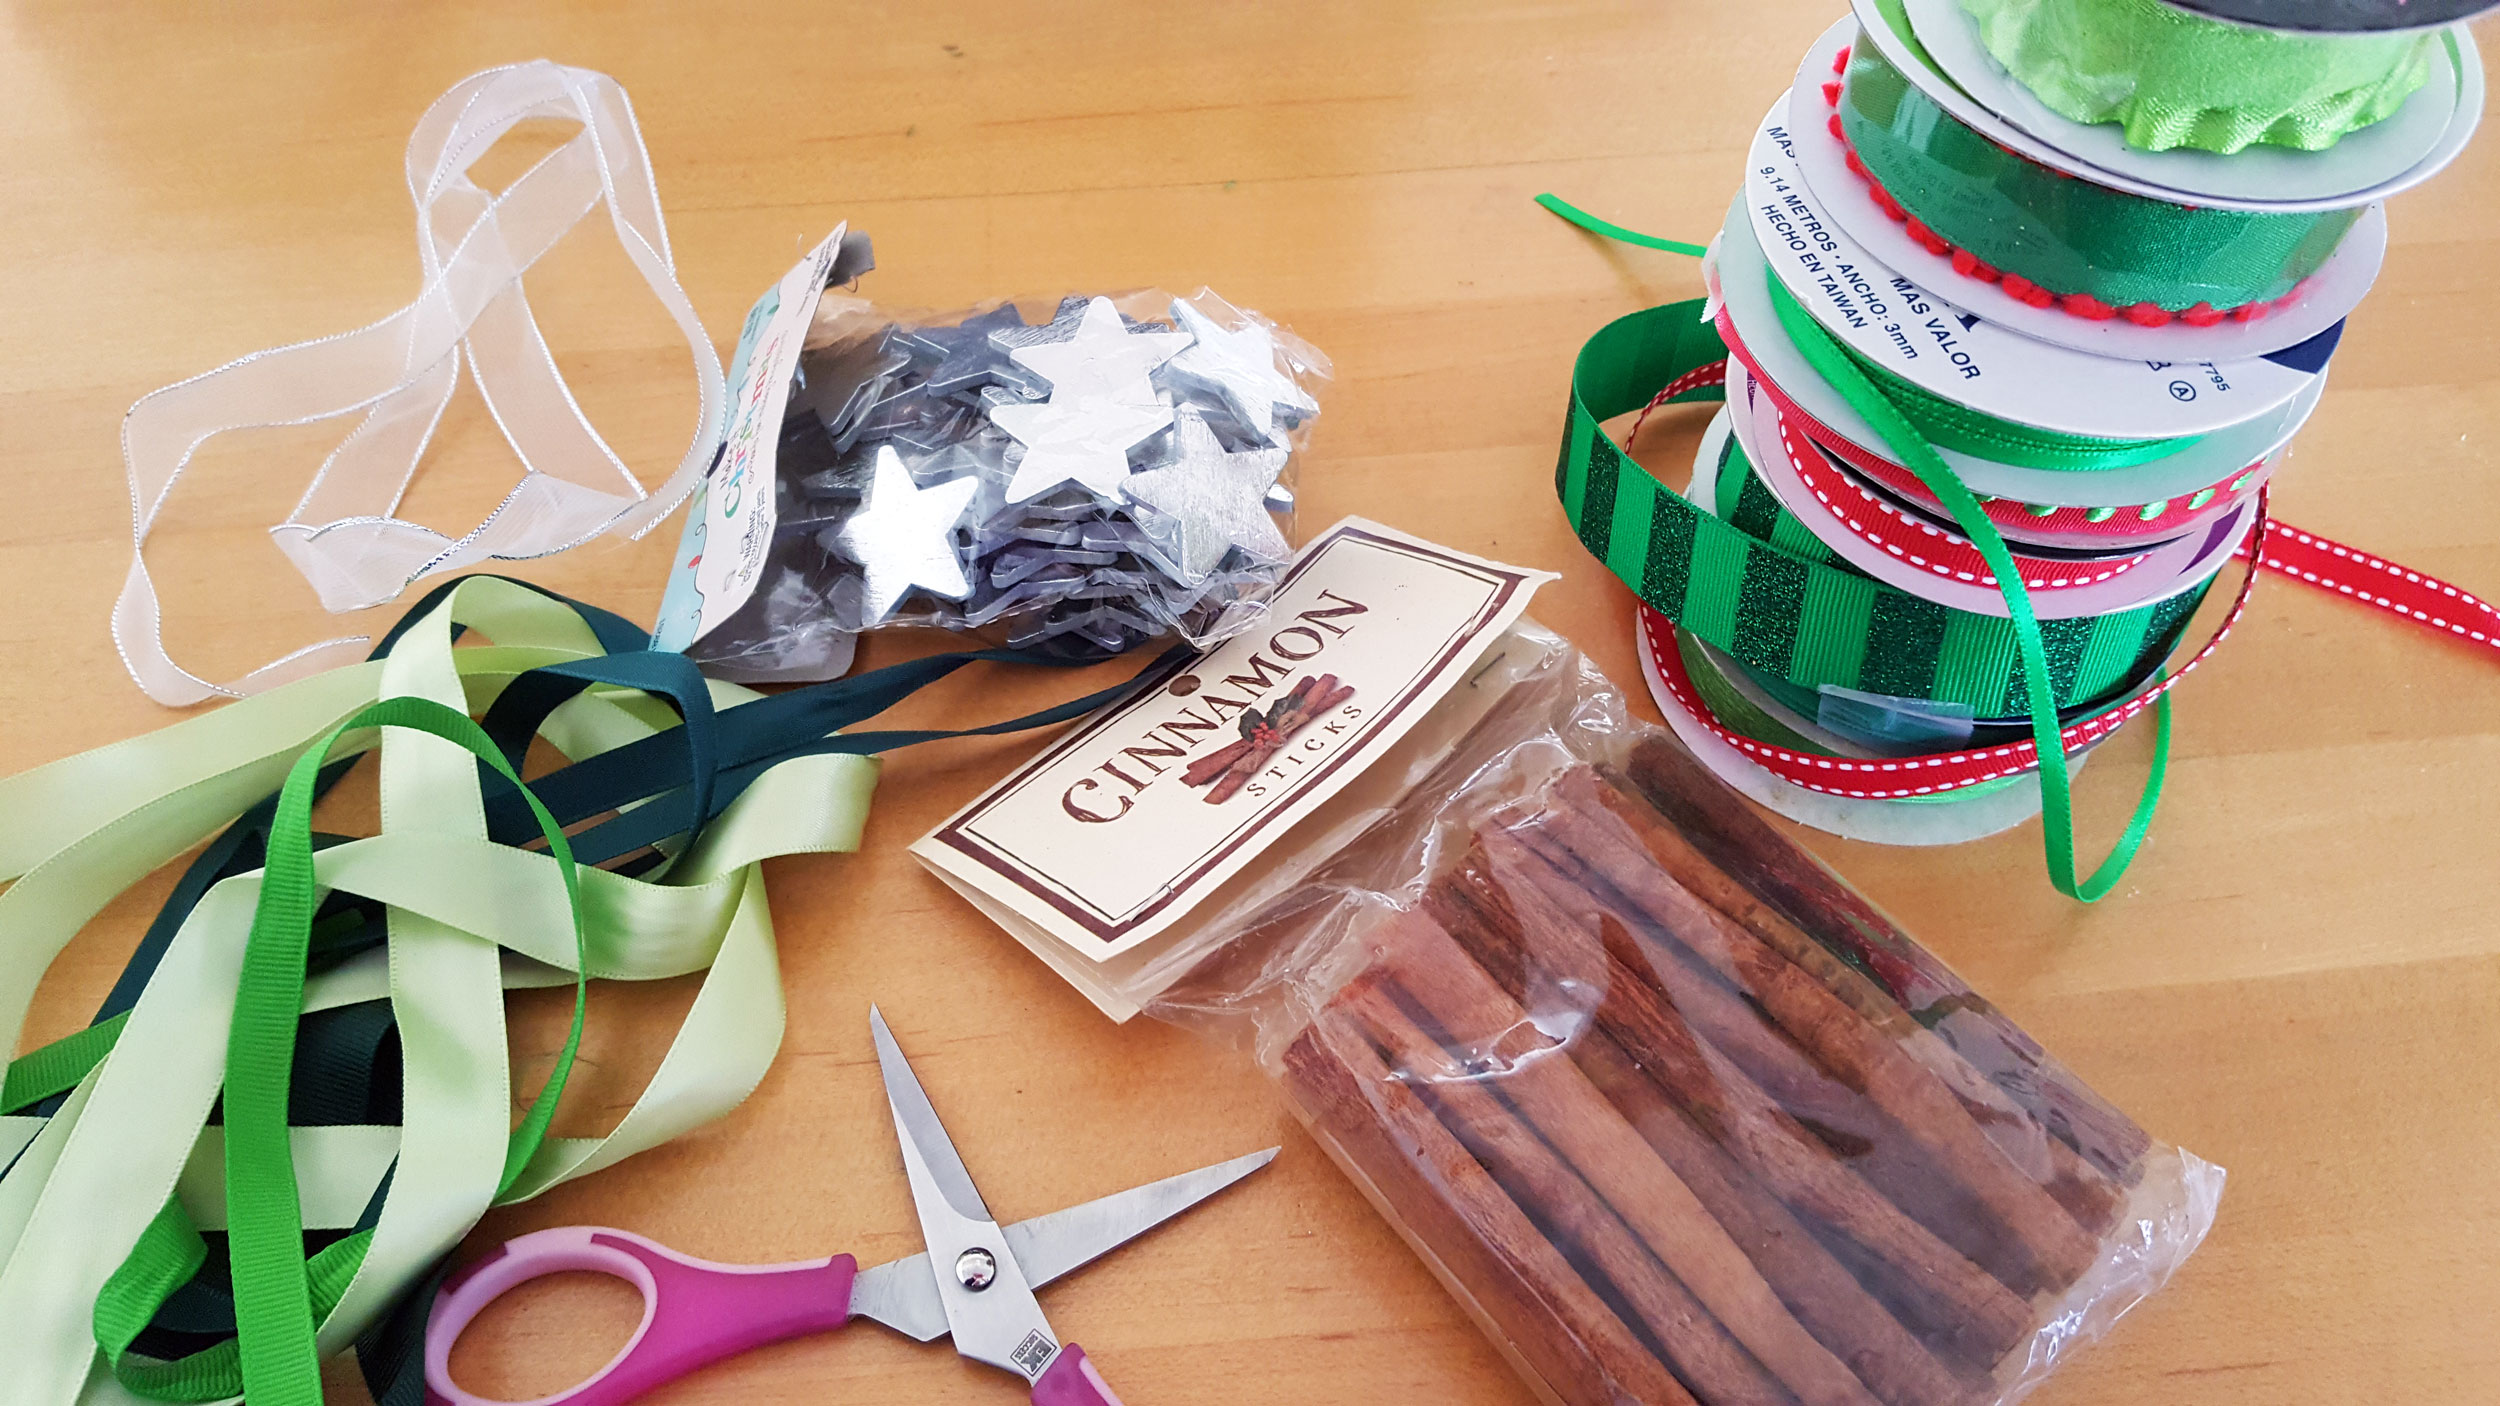 Ribbon tree ornament supplies, including cinnamon sticks, ribbon, scissors, glue. | OrnamentShop.com